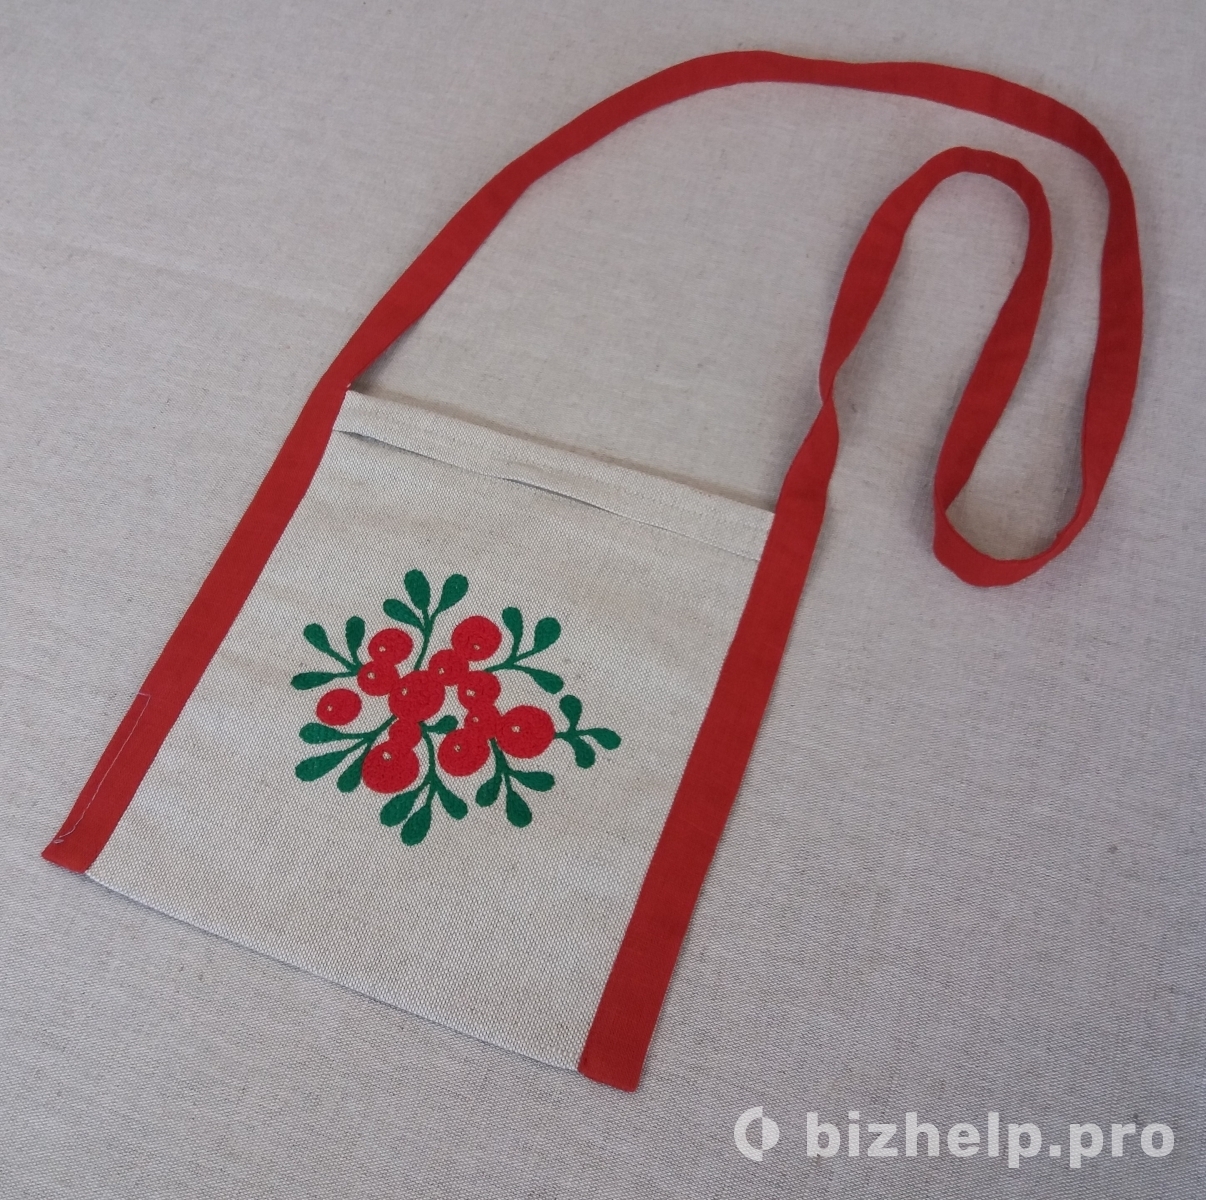 Фотография 2: Льняная сумка | Текстильная сумка | Сумка паломника | Ручная работа